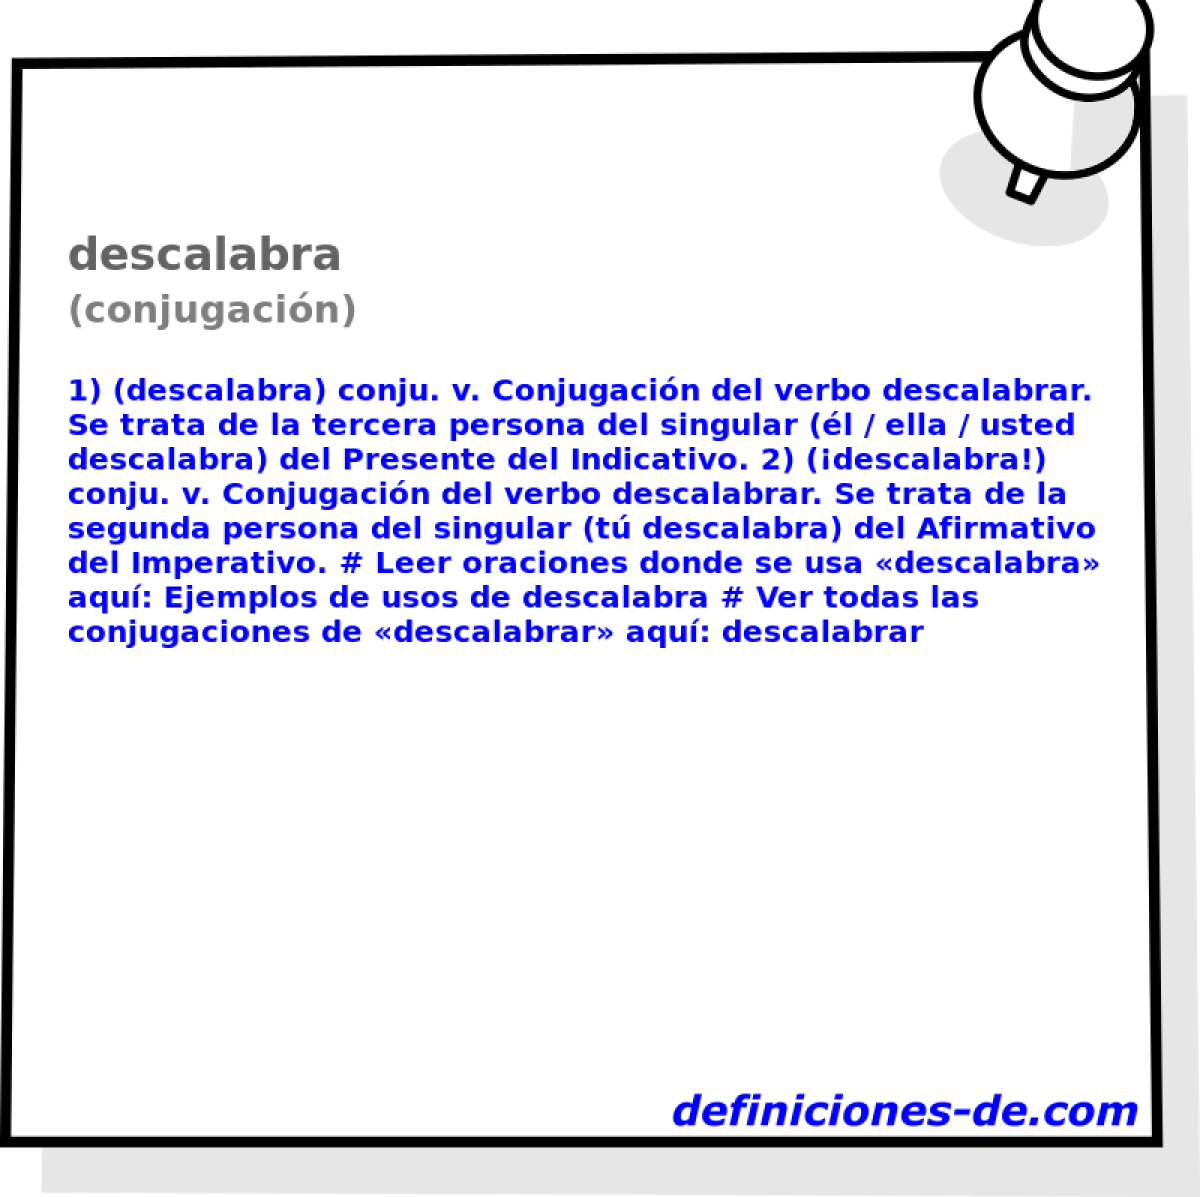 descalabra (conjugacin)